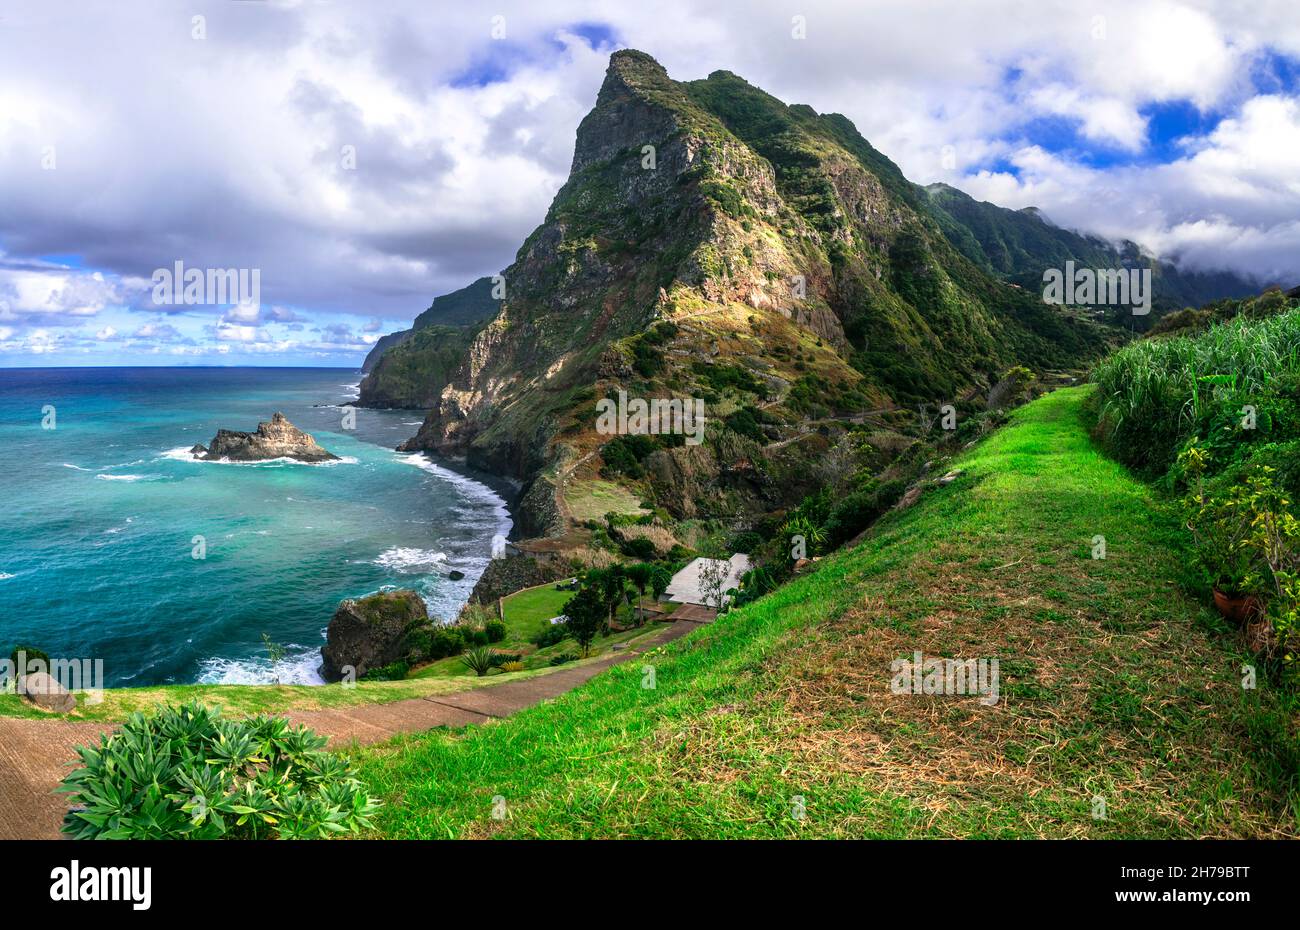 Isla de Madeira, paisaje natural de increíble belleza. Mirador (Miradouro) de Sao Cristovao con impresionante roca. Boaventura , parte norte de la isla Foto de stock